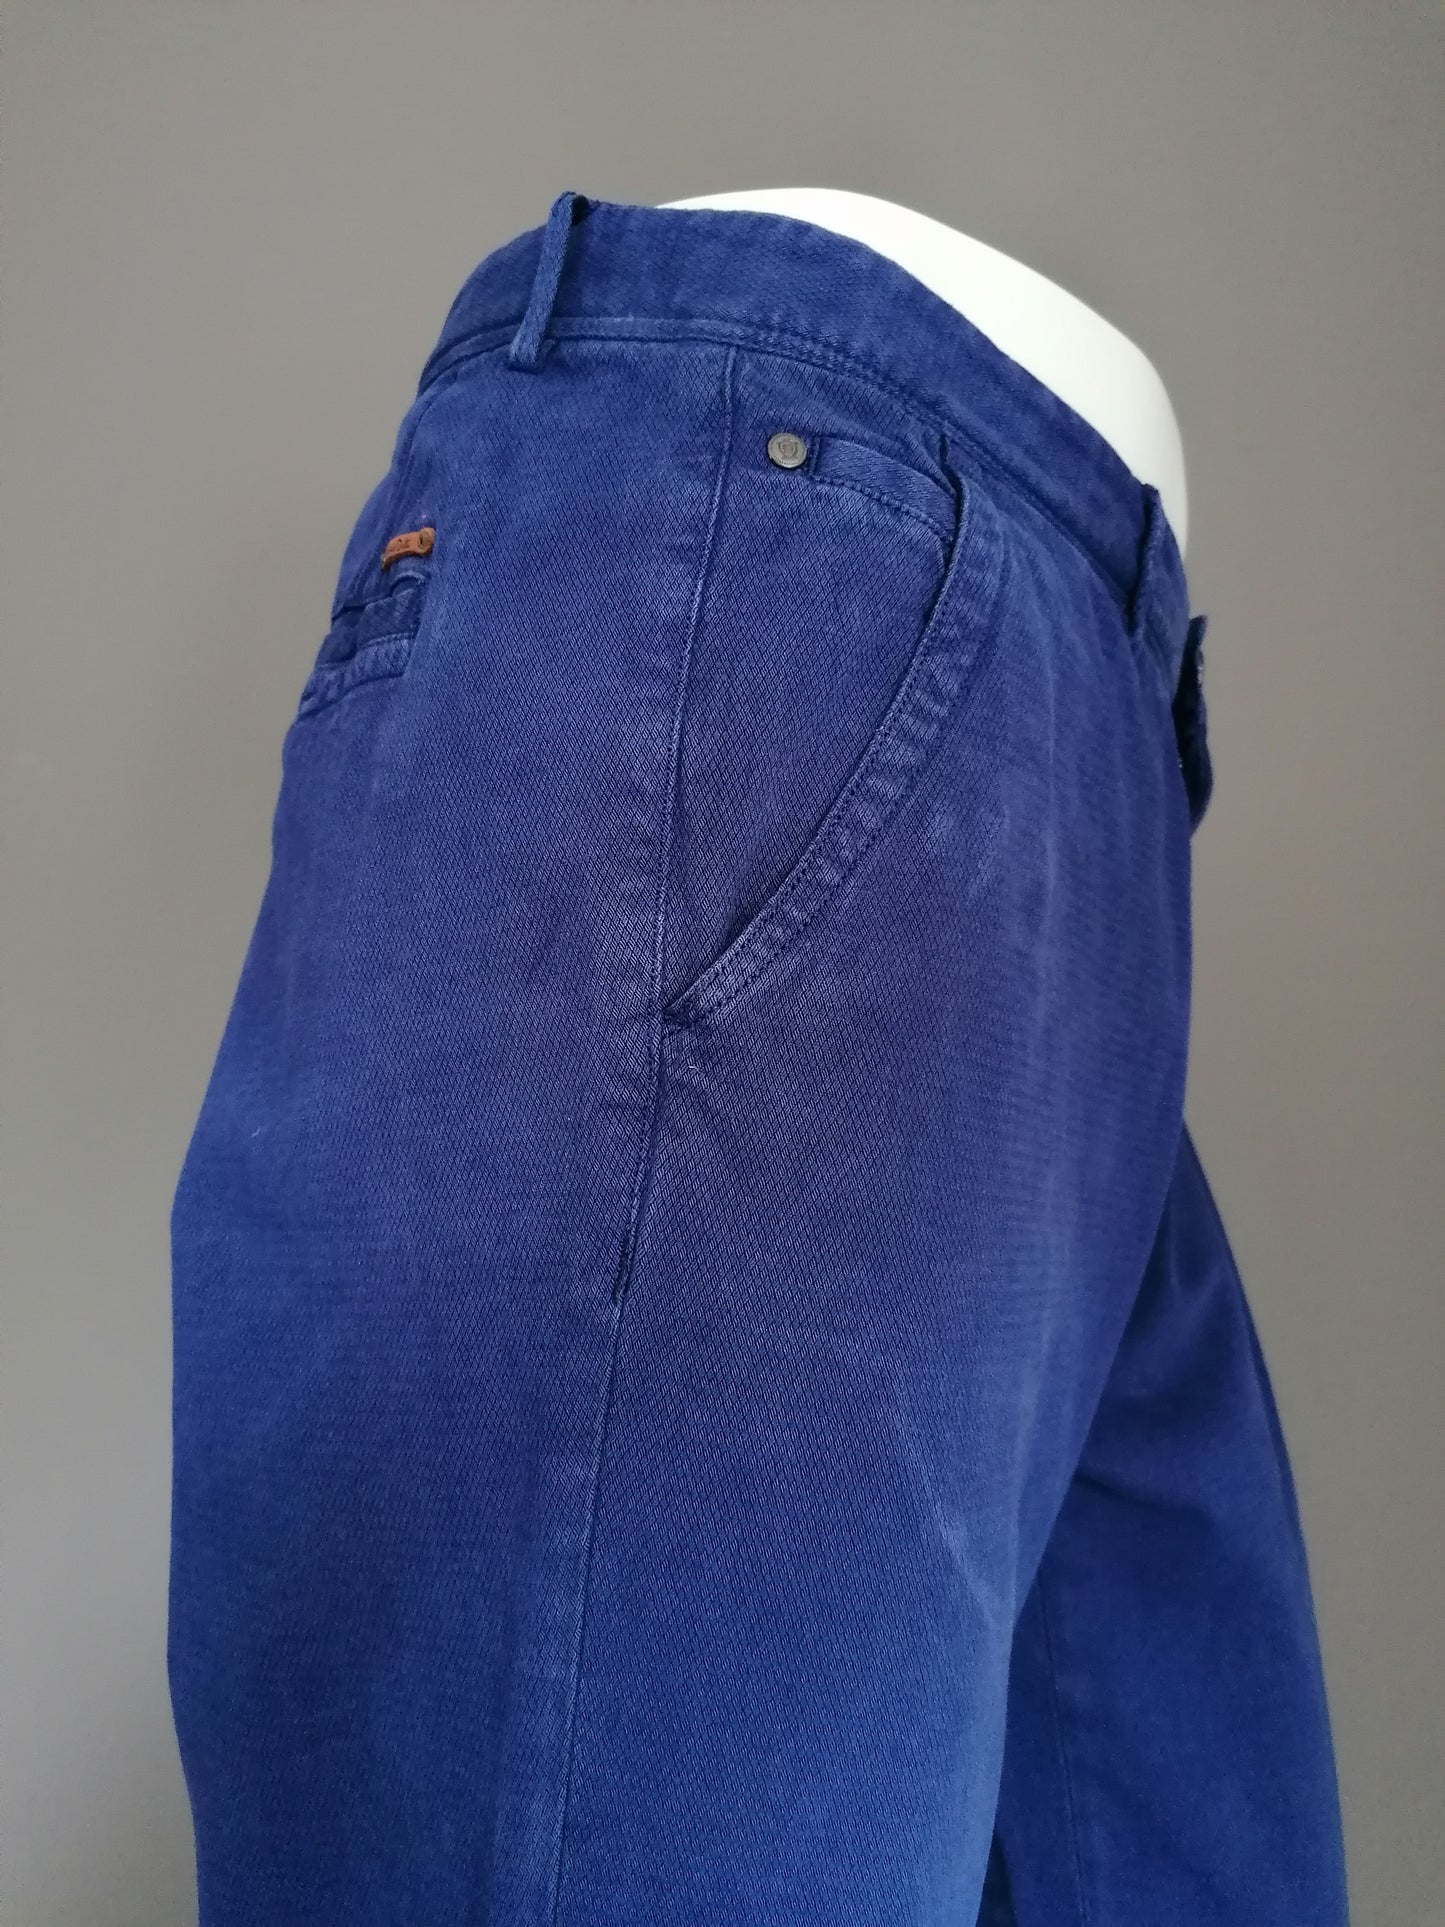 Pantalones Massimo Dutti. Blaur coloreado. Tamaño 48. FIT casual.